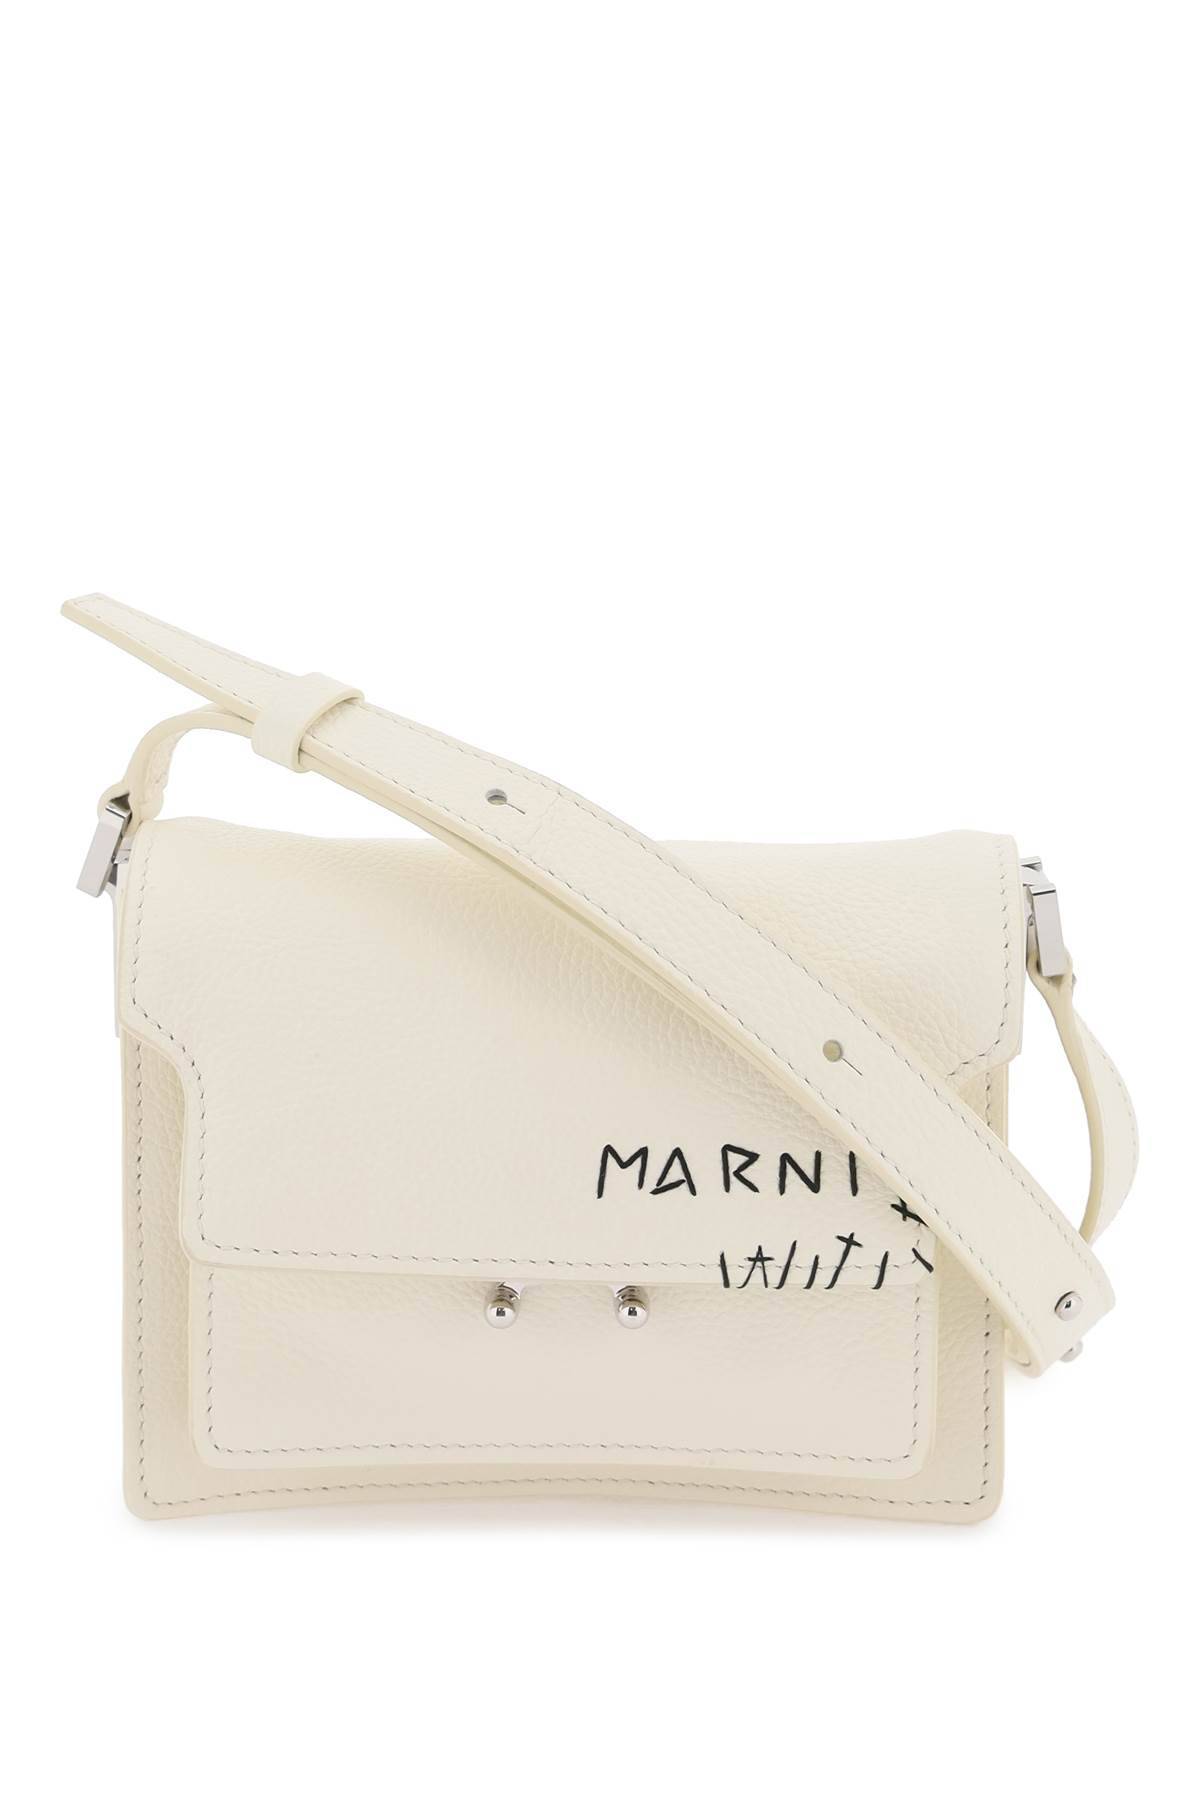 Marni MARNI mini soft trunk shoulder bag